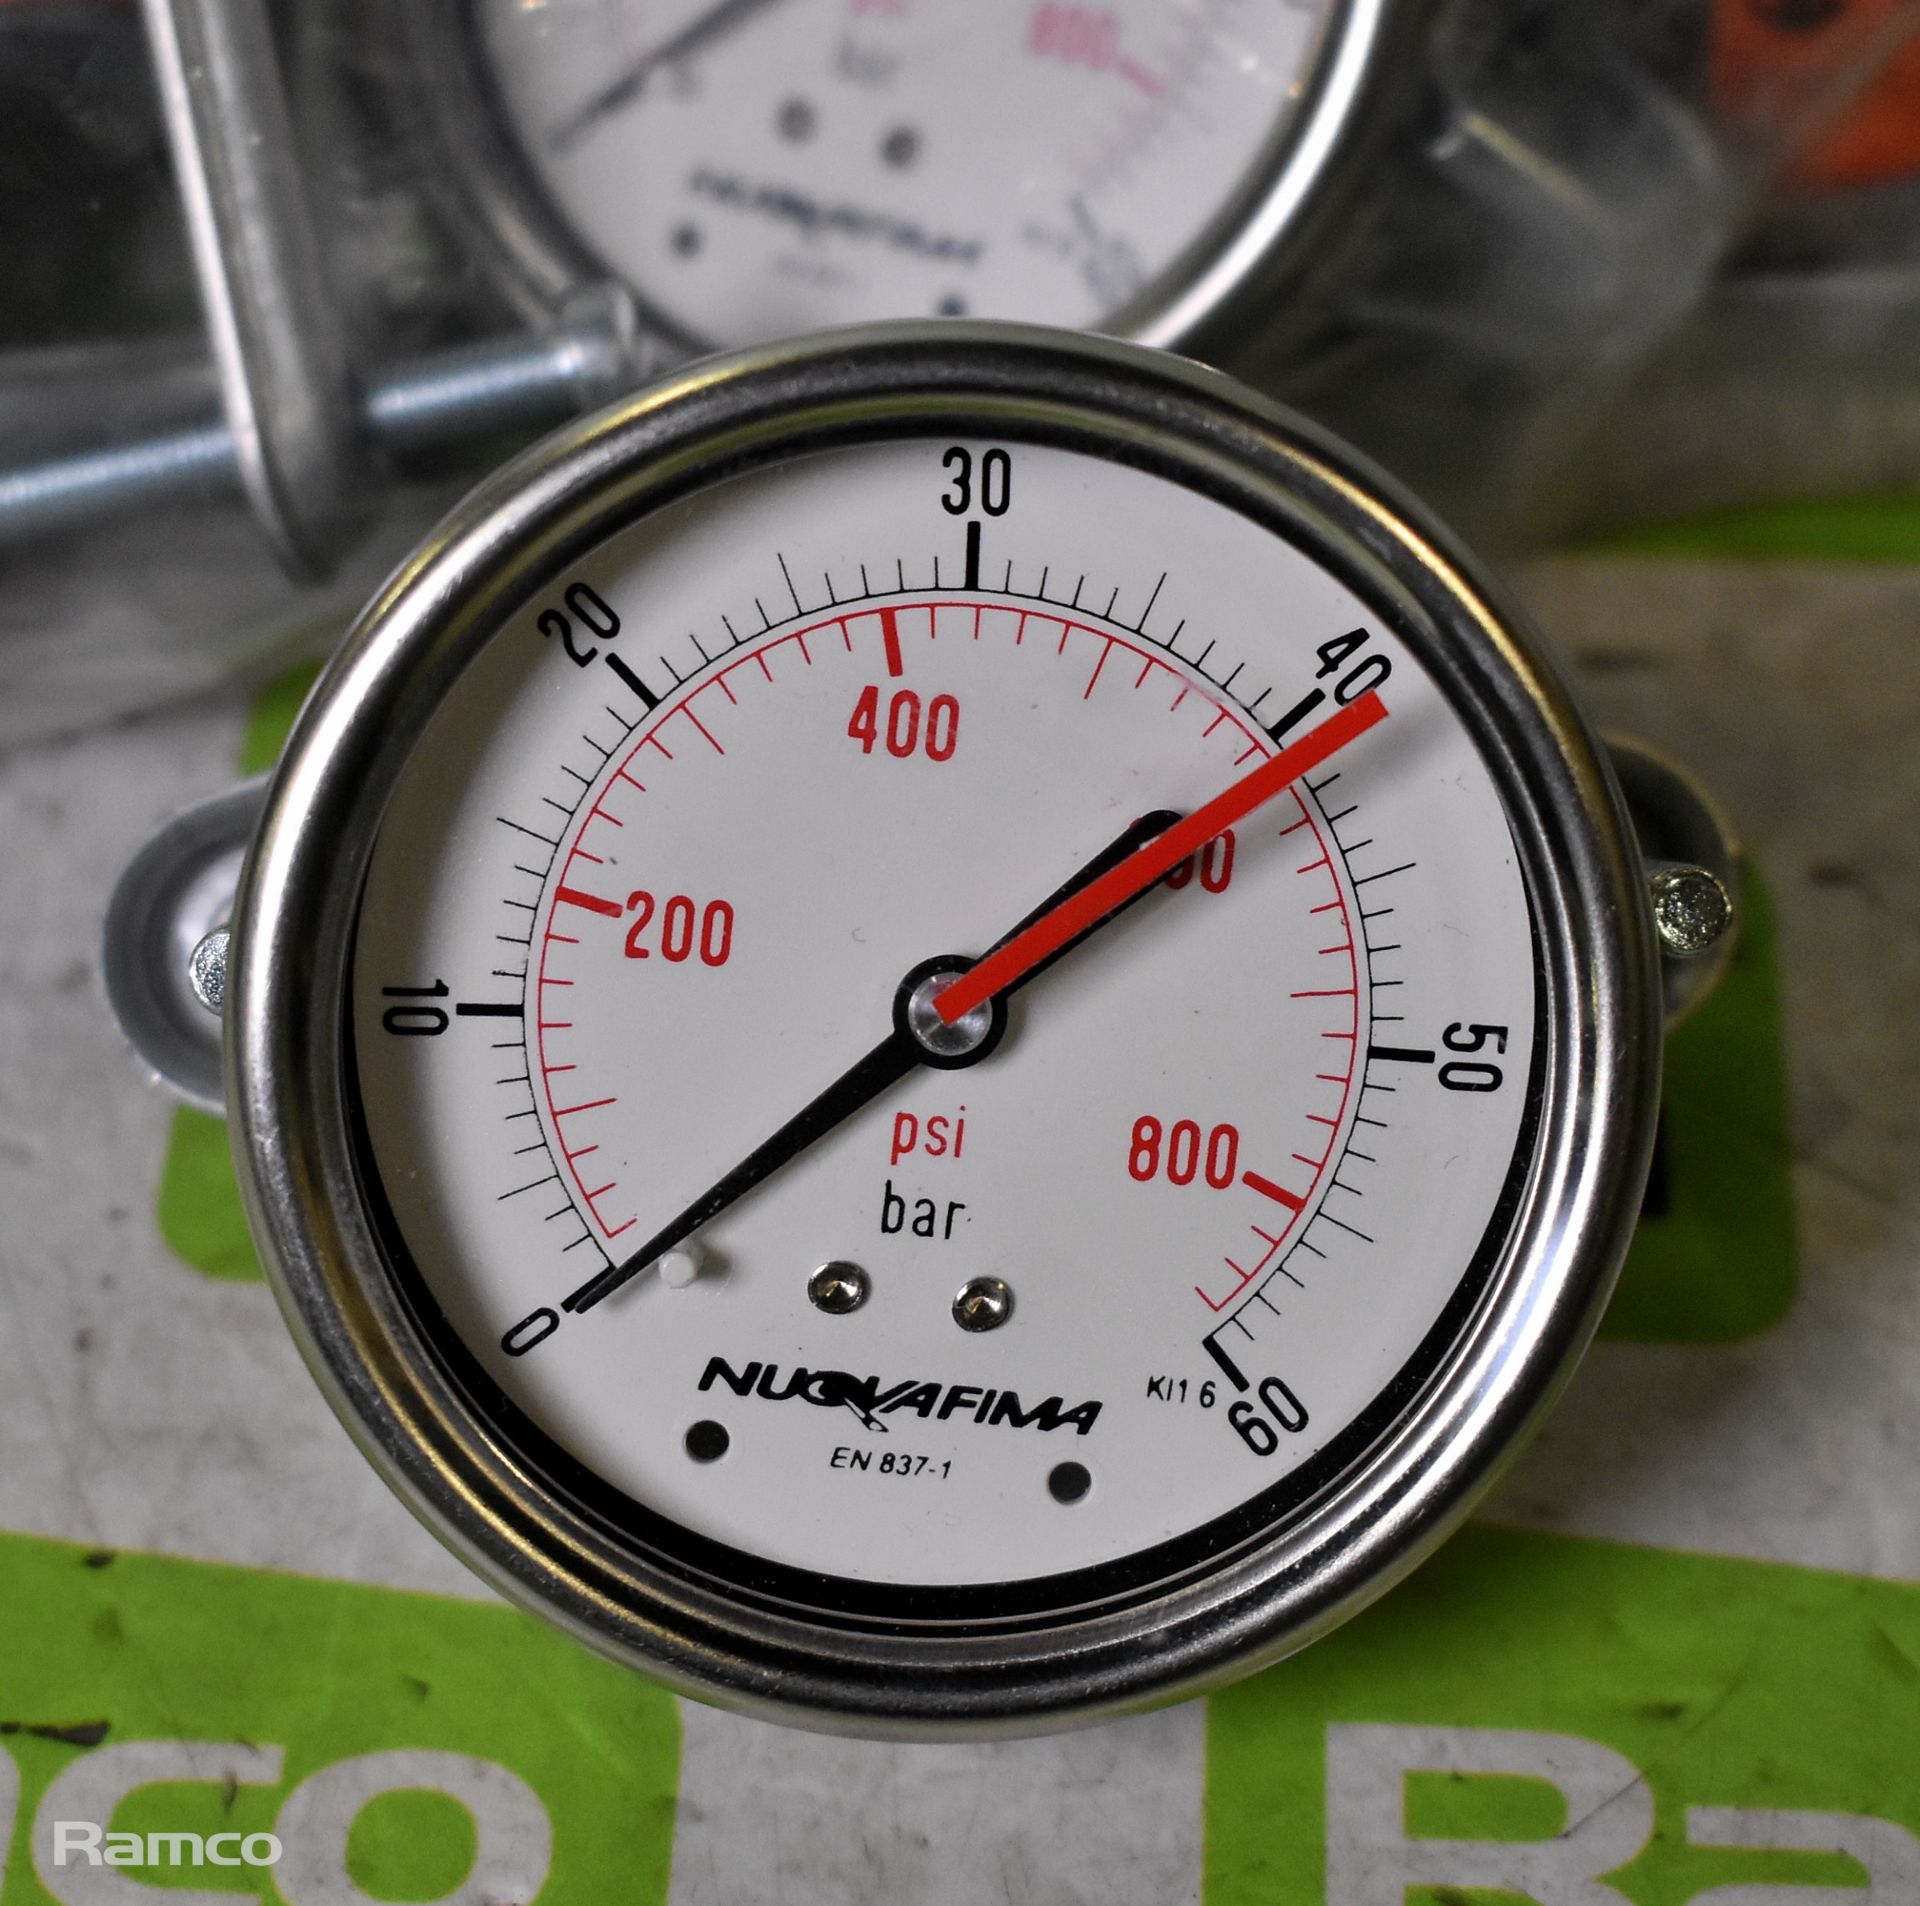 10x Nuova Fima EN 837-1 pressure gauges (5 x 10 bar/140 psi and 5 x 60 bar/800 psi) - Image 2 of 5